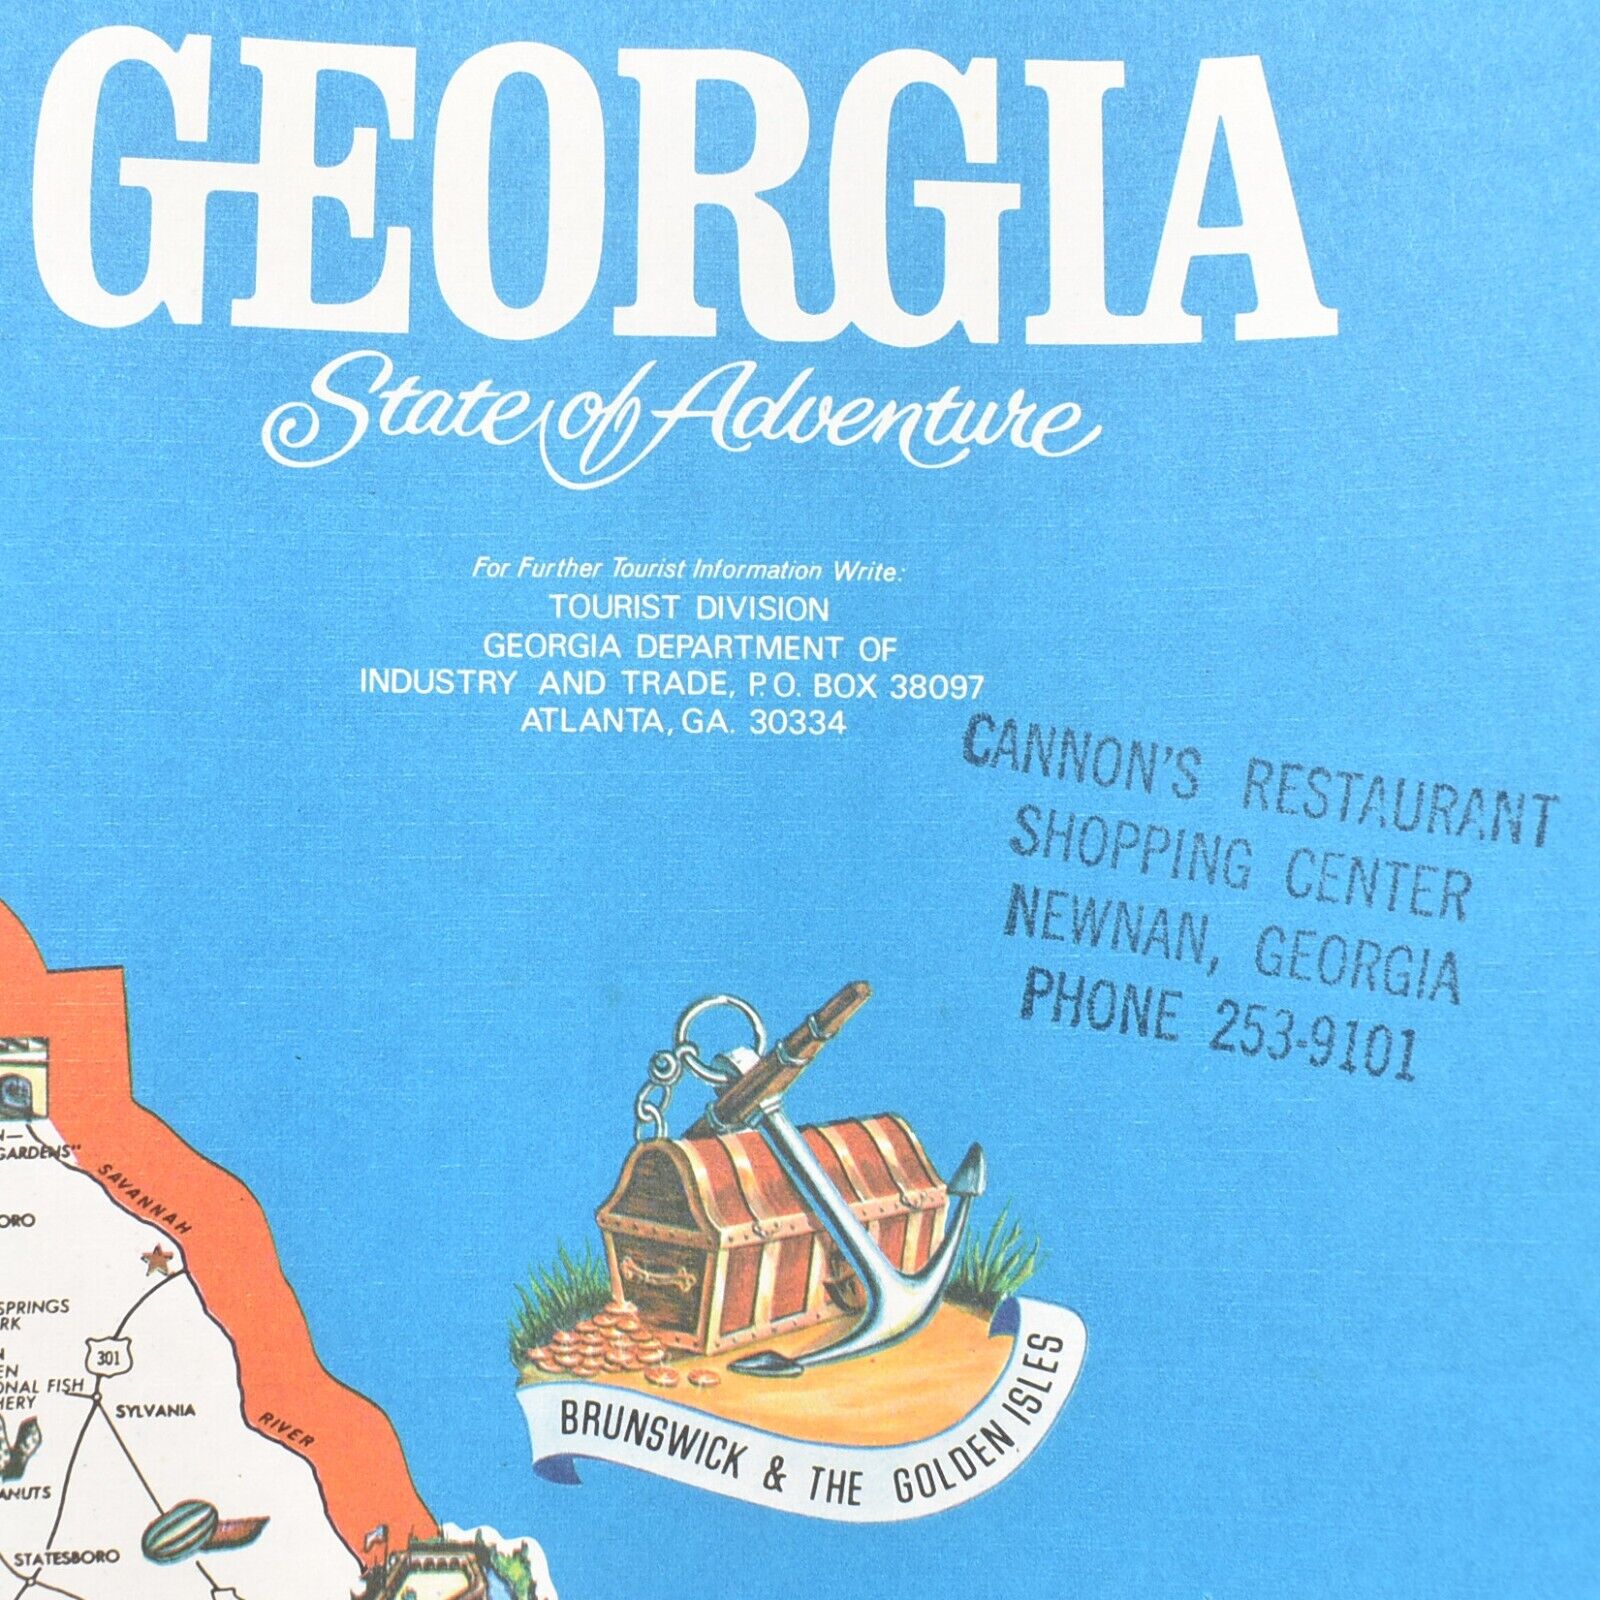 1960s Cannon's Restaurant Shopping Center Restaurant Placemat Newnan Georgia